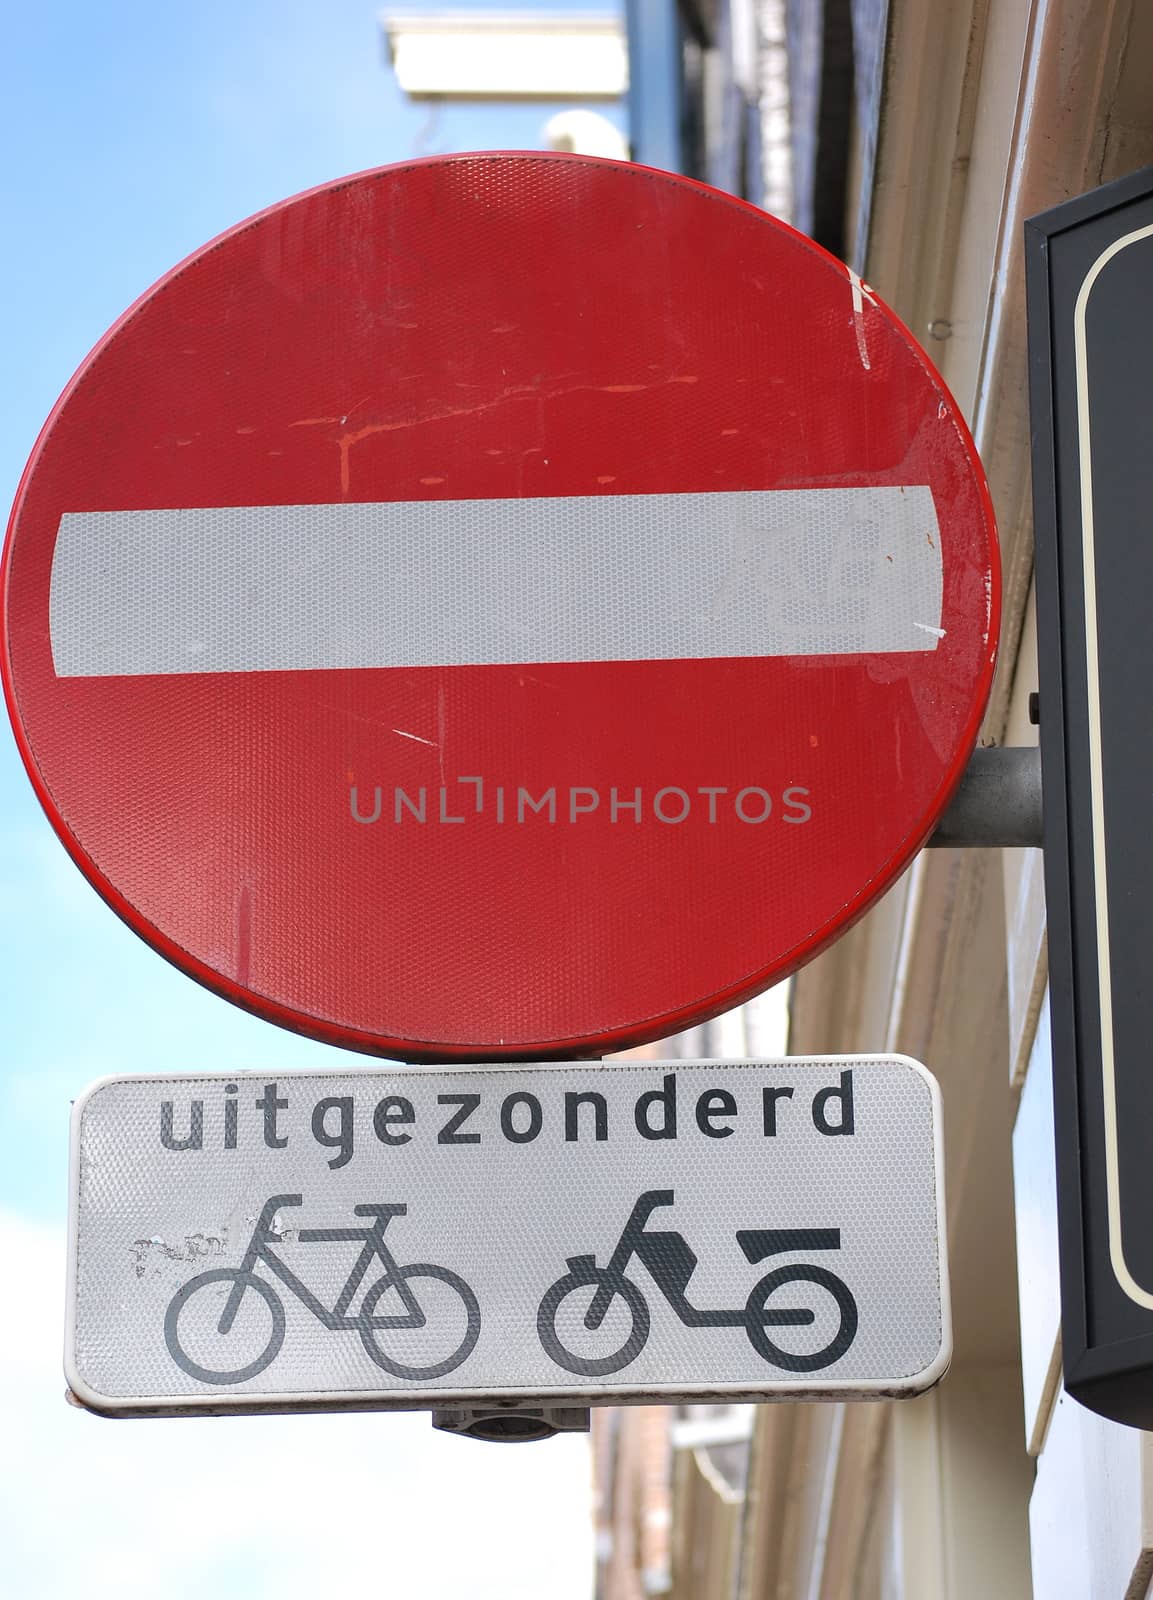 Bikes displayed in Amsterdam, Netherlands.